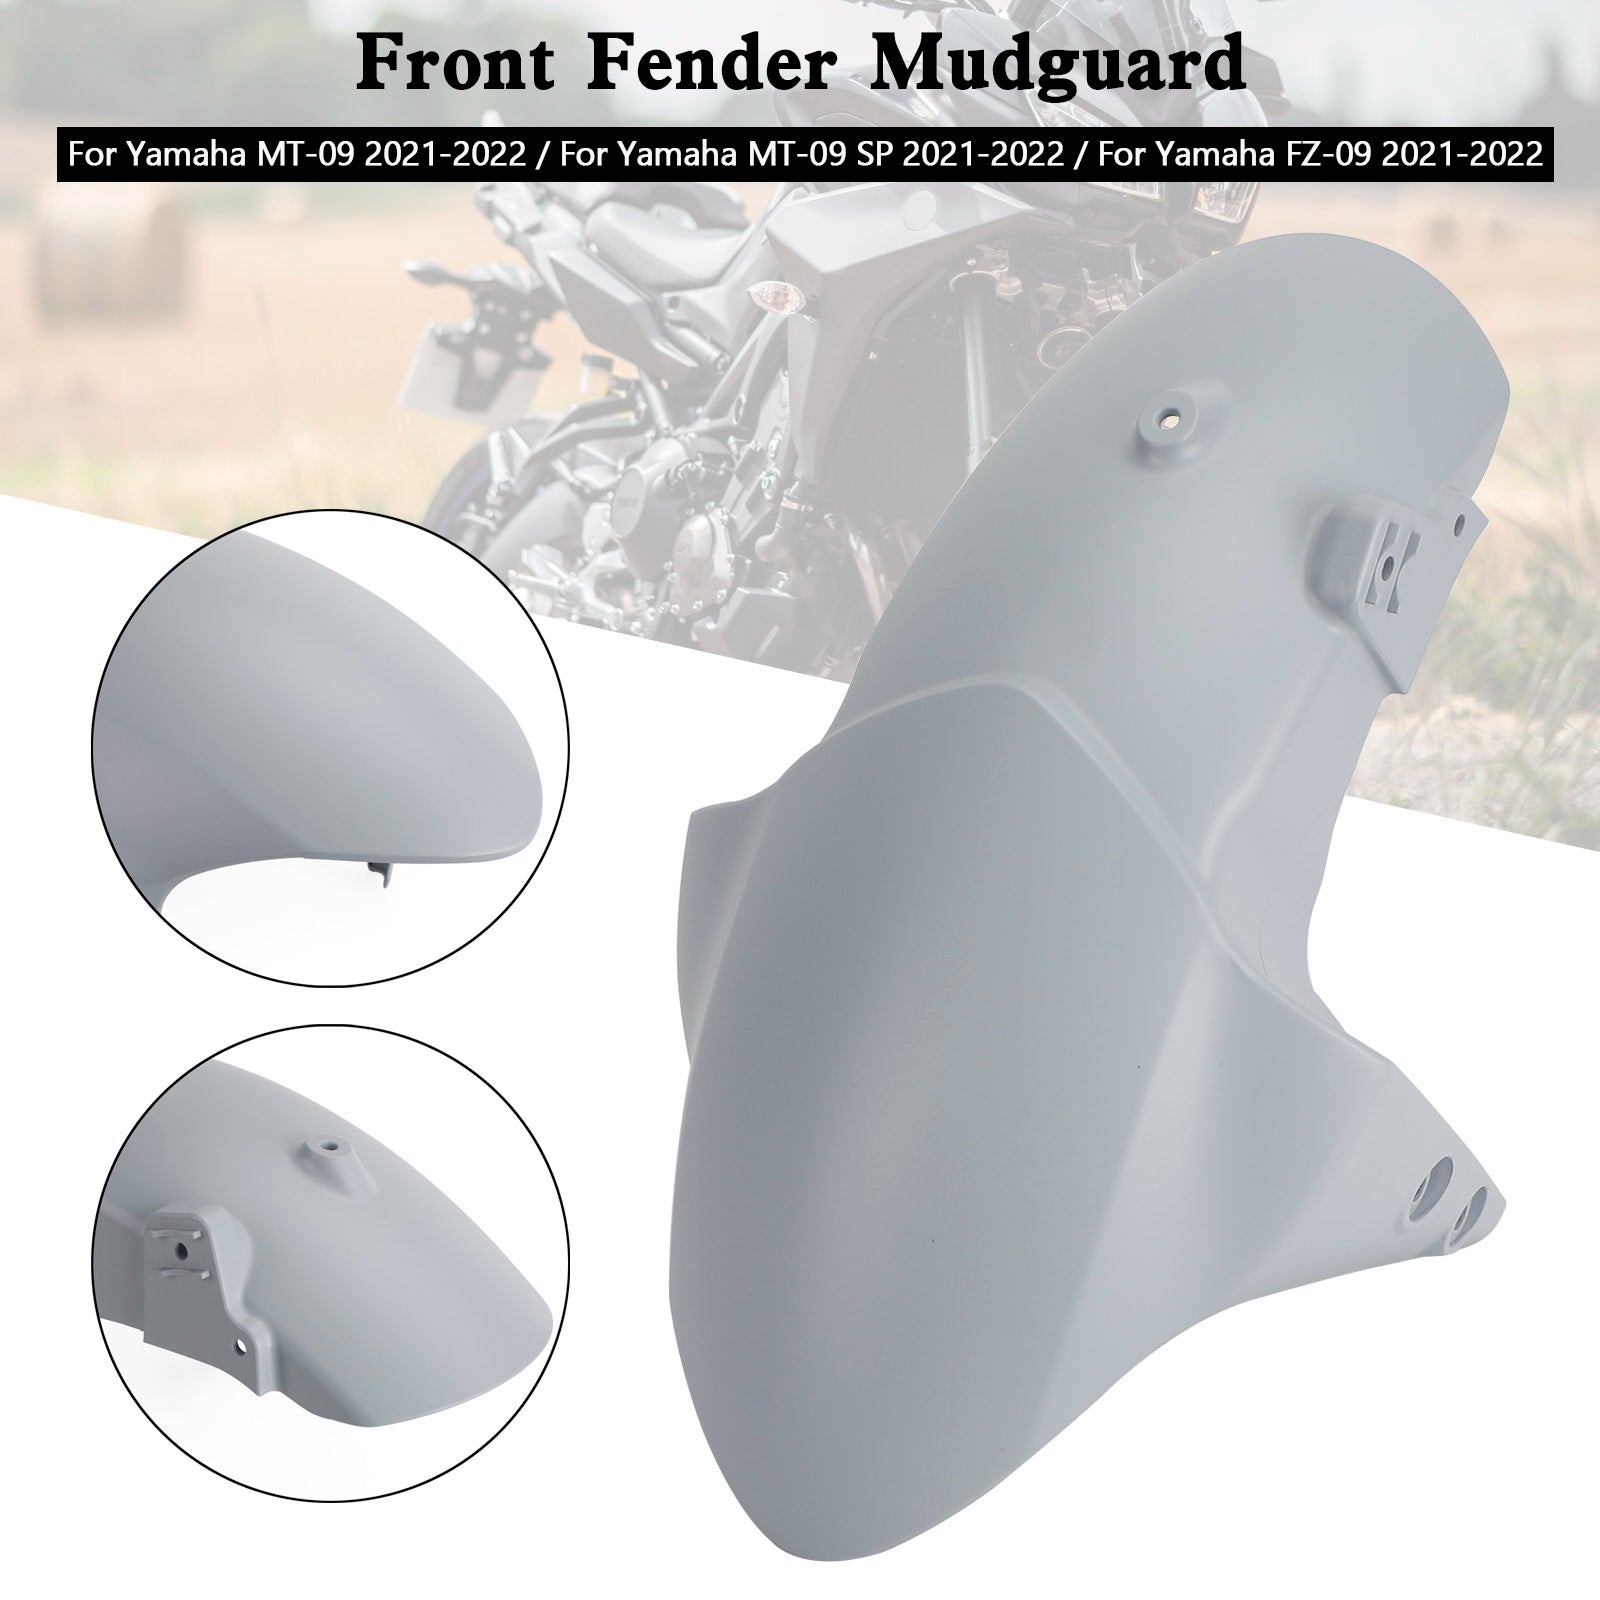 Front Fender Mudguard Fairing For Yamaha MT-09 FZ-09 MT09 SP 2021-2022